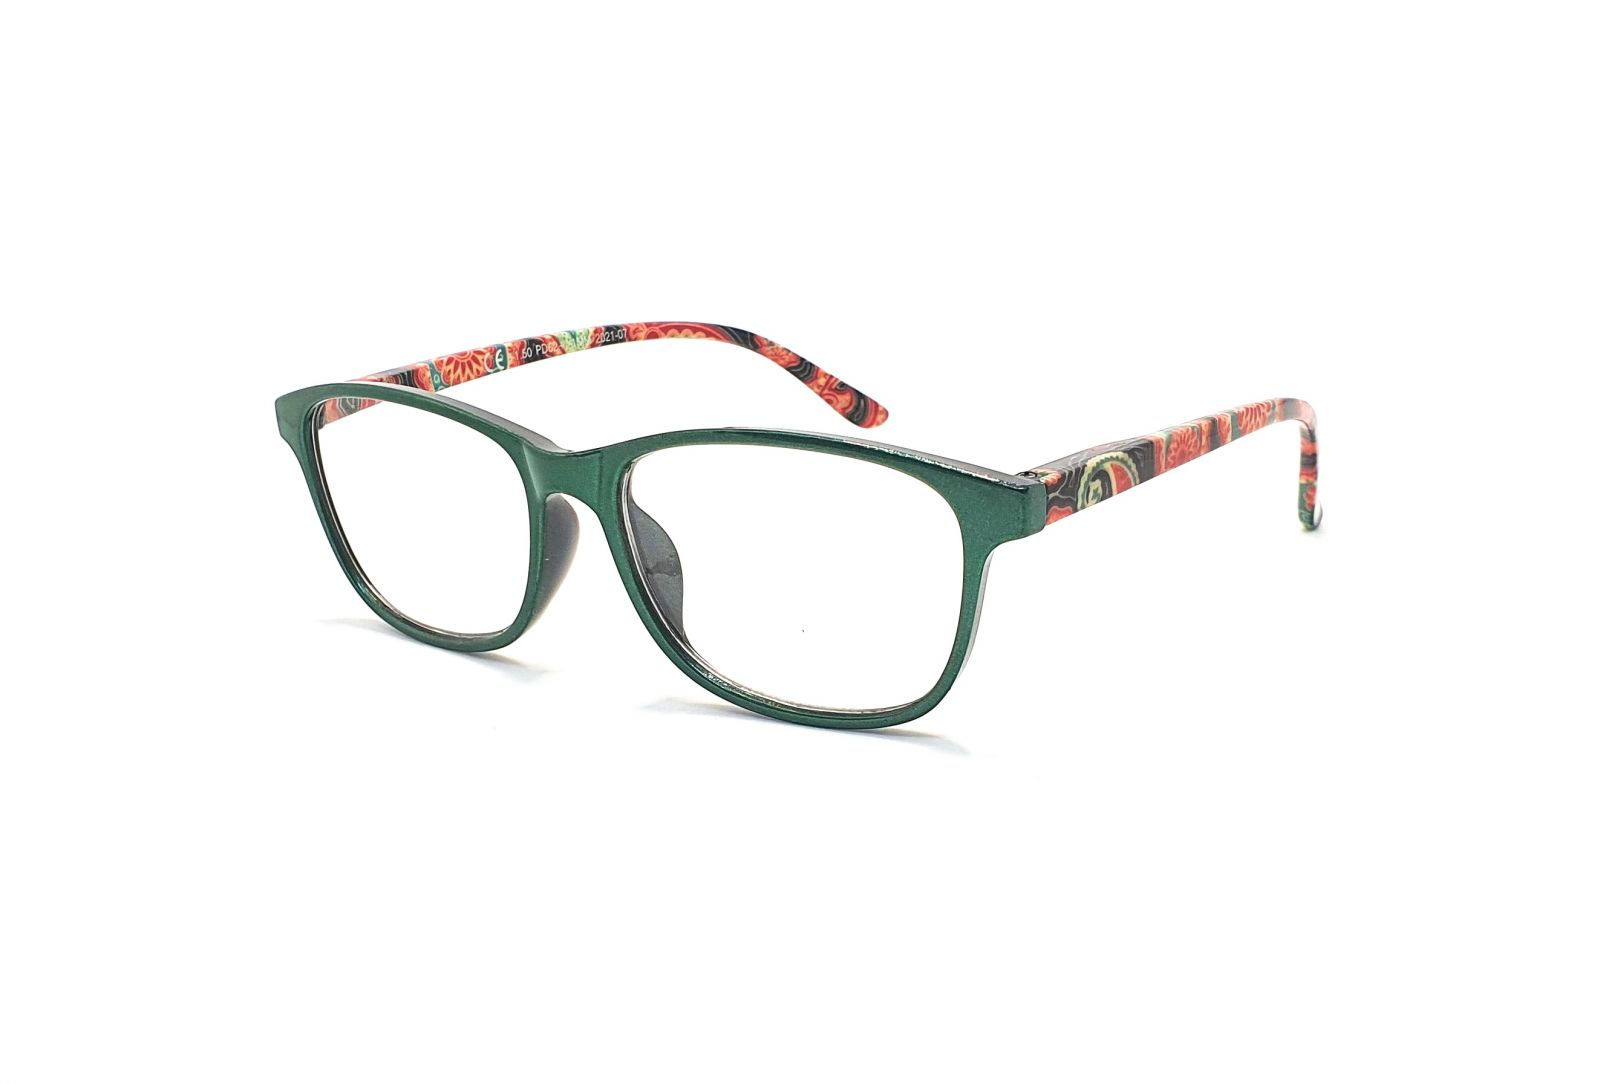 INfocus Dioptrické brýle R4150 / +2,50 flex green-mix